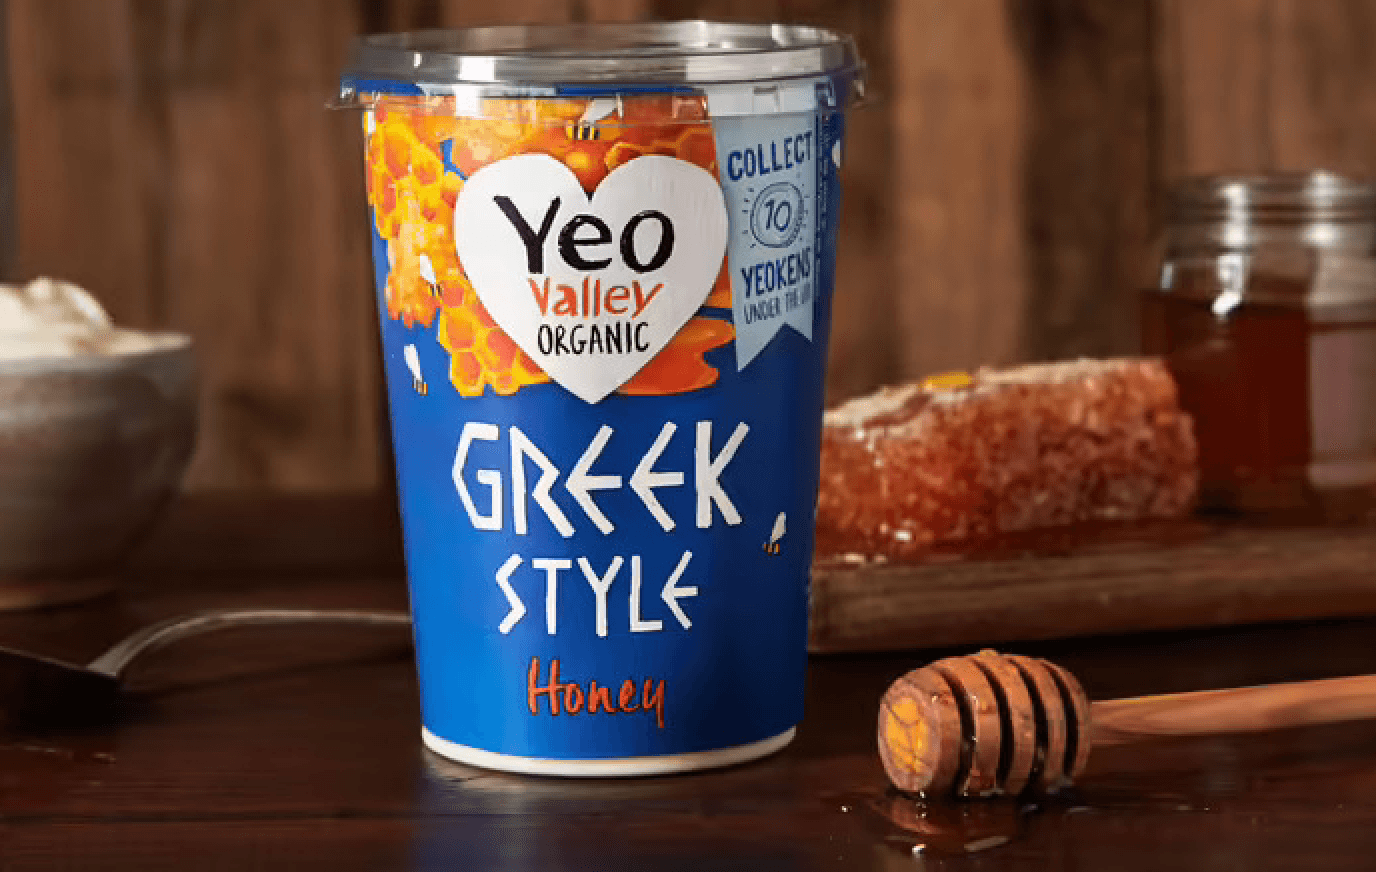 Greek Style Yogurt with Honey